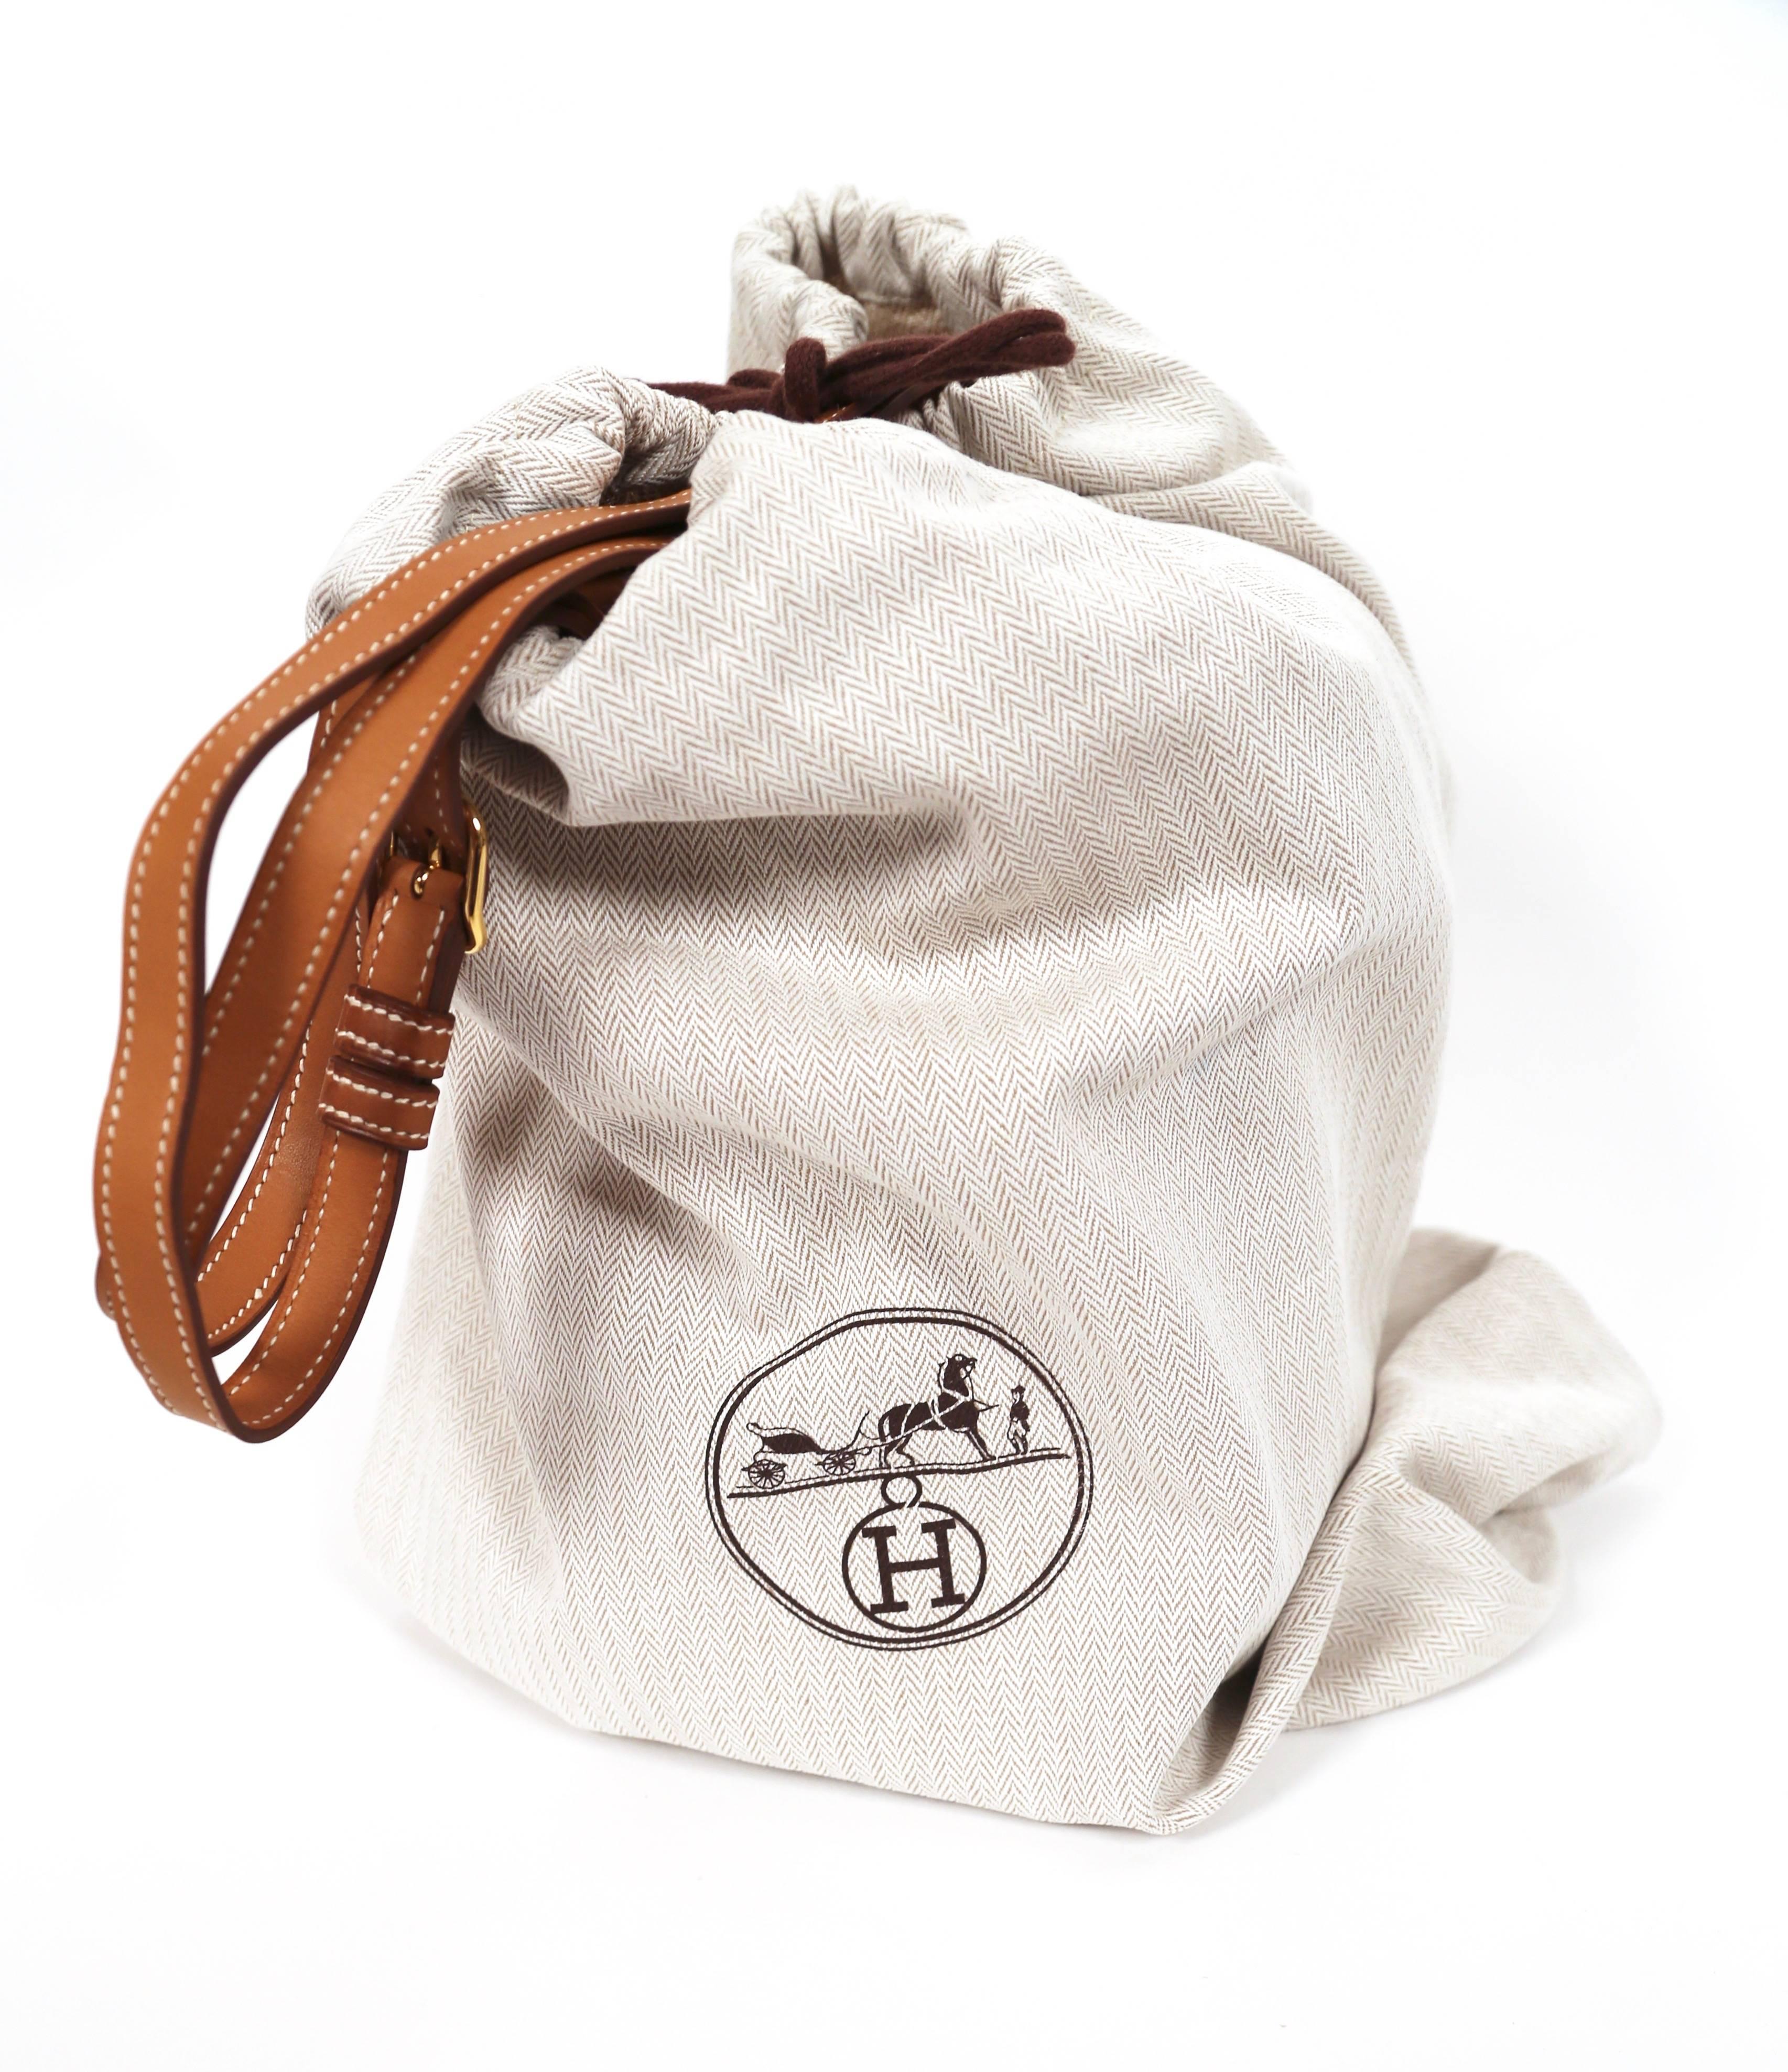 Women's or Men's very rare HERMES Farming Picnic Osier bag in wicker and veau barenia leather